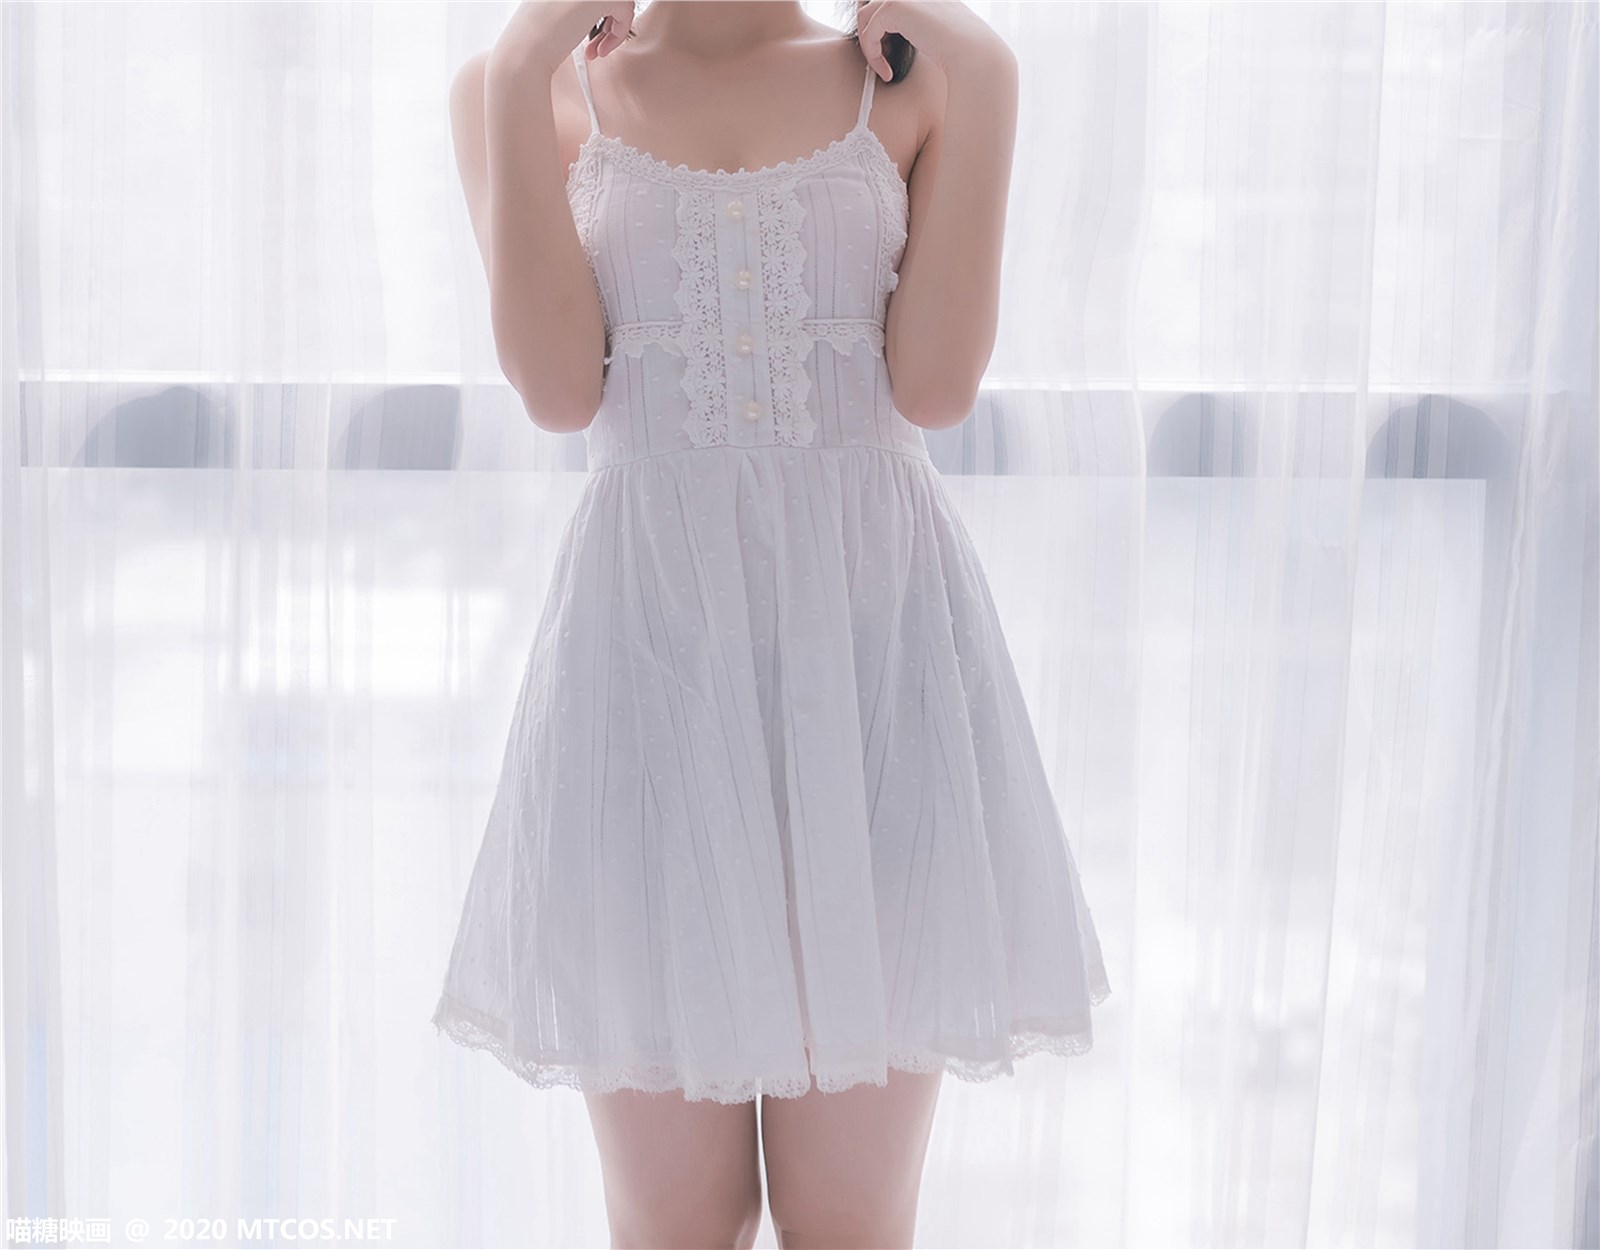 A girl in white dress(6)